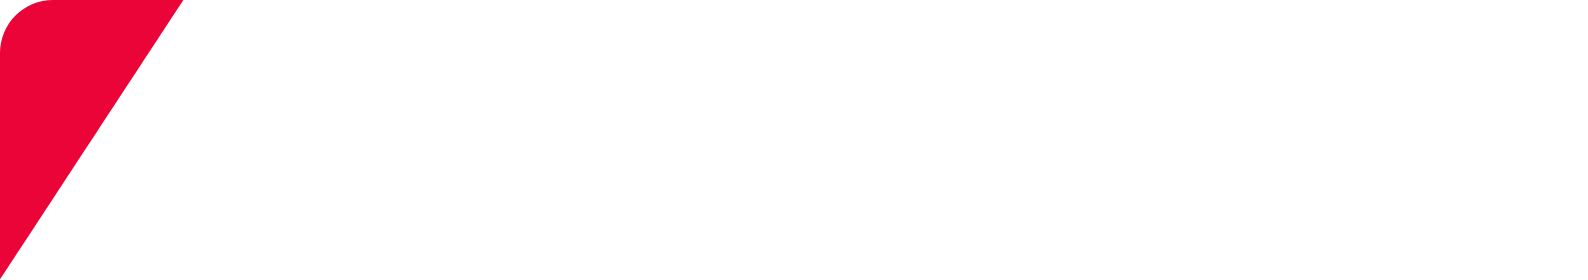 Keyence Logo groß für dunkle Hintergründe (transparentes PNG)